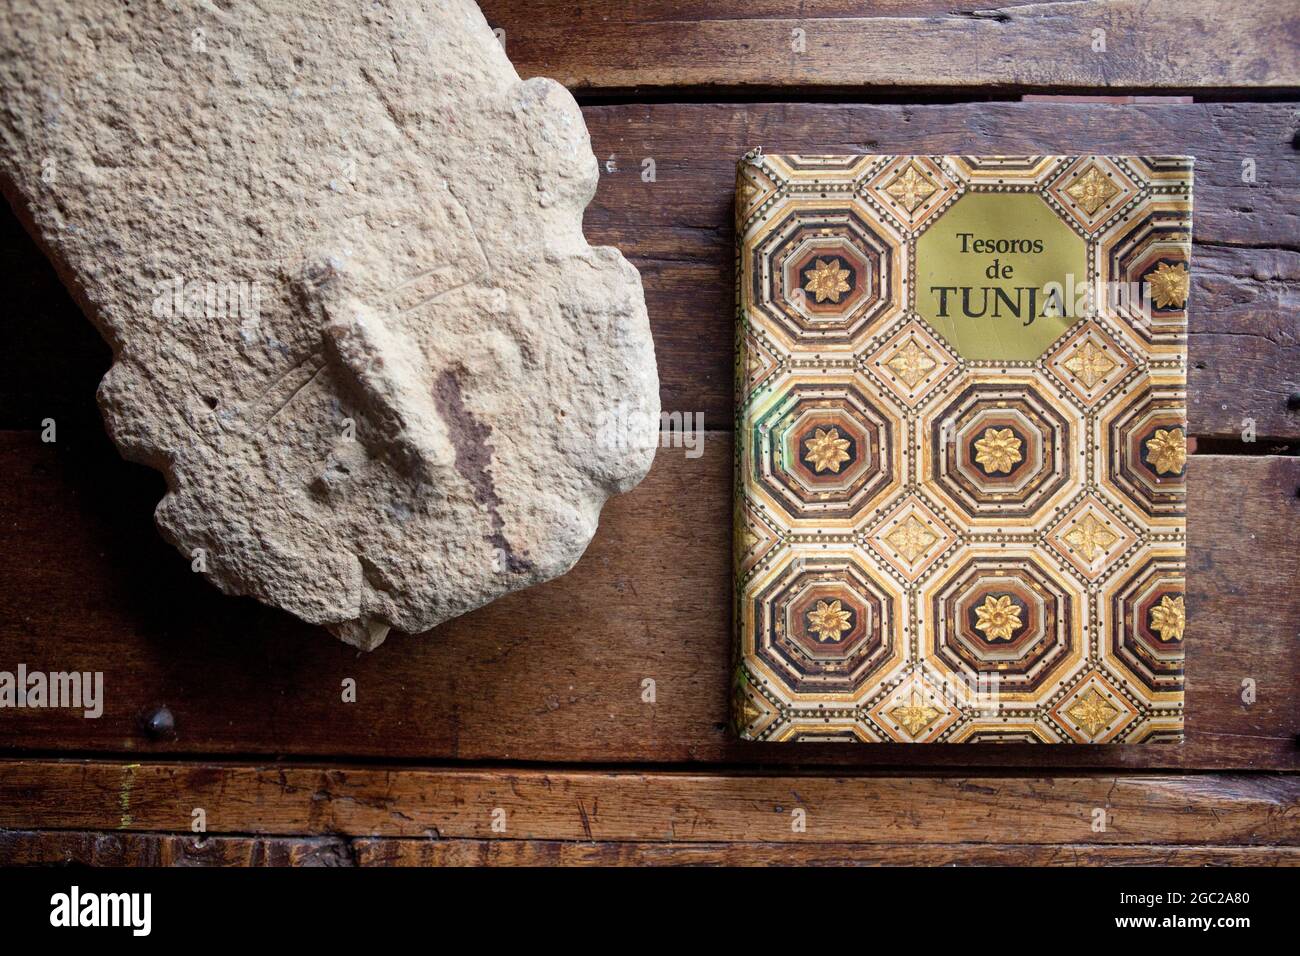 Tesoros de Tunja Archeologia colombiana libro da tavola. Foto Stock